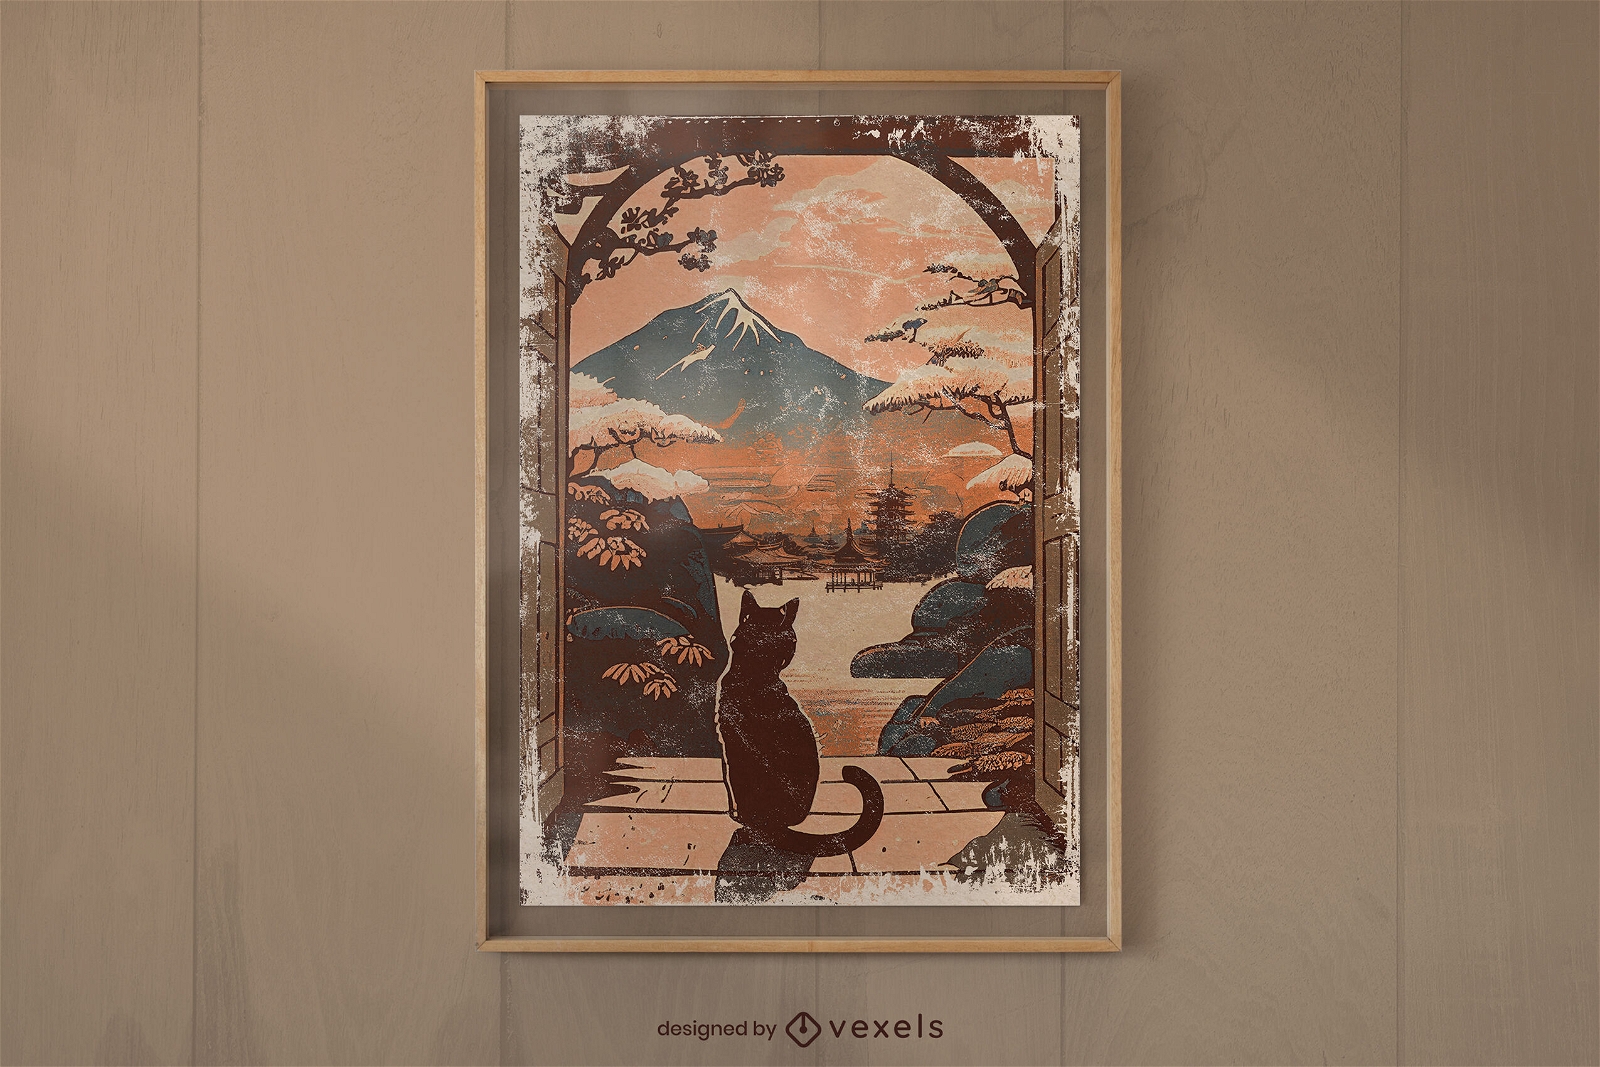 Gato mirando dise?o de cartel de paisaje japon?s.